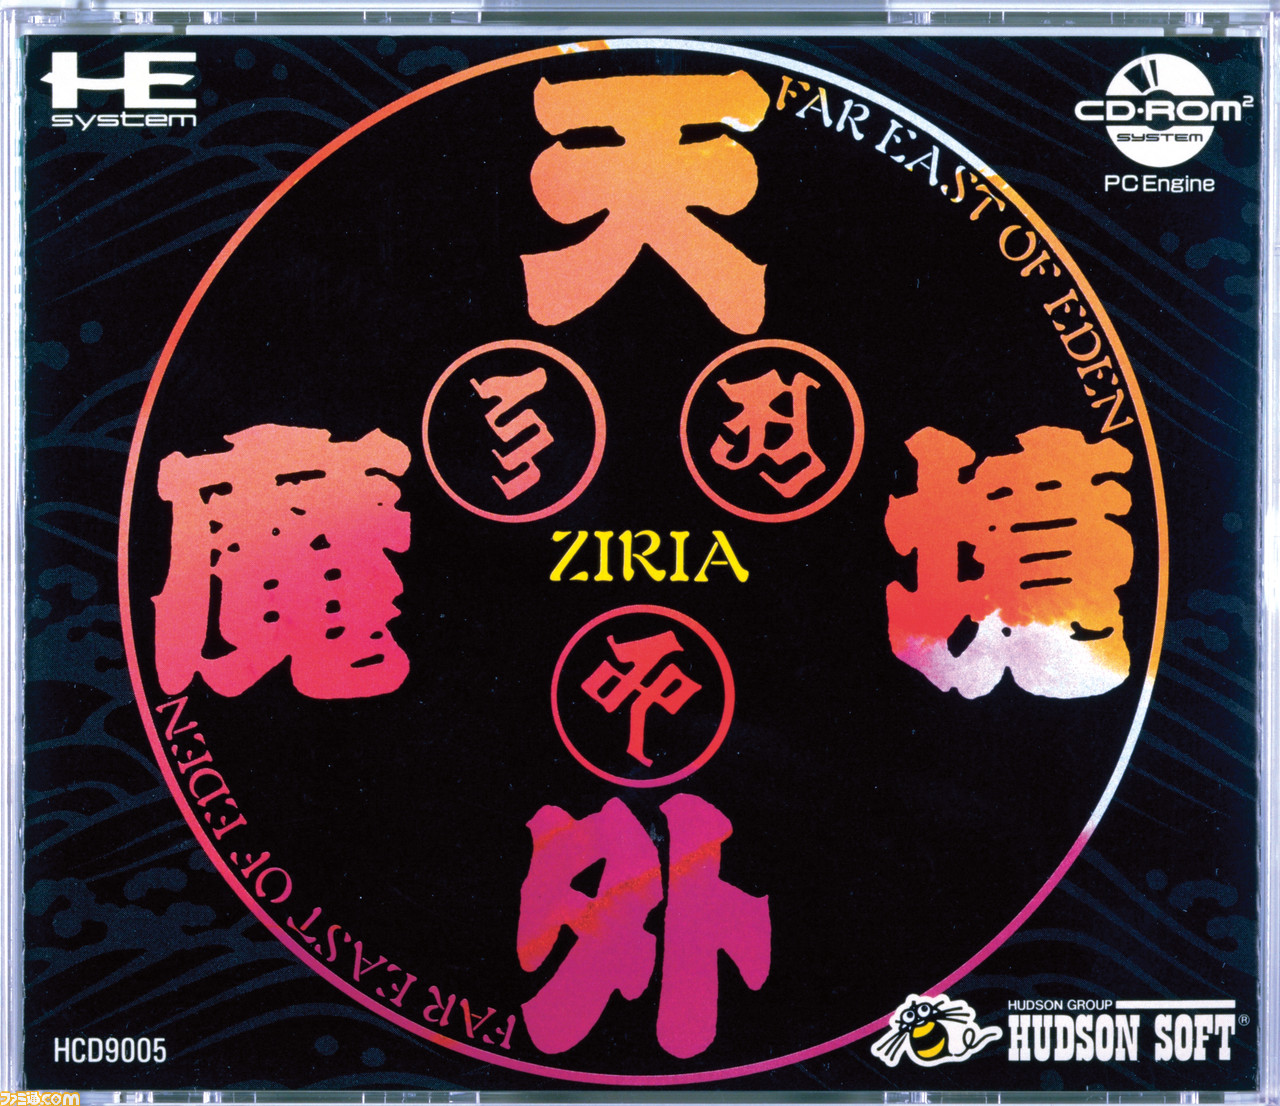 CD-ROMを使った世界初のRPG『天外魔境 ZIRIA』が発売された日。大容量